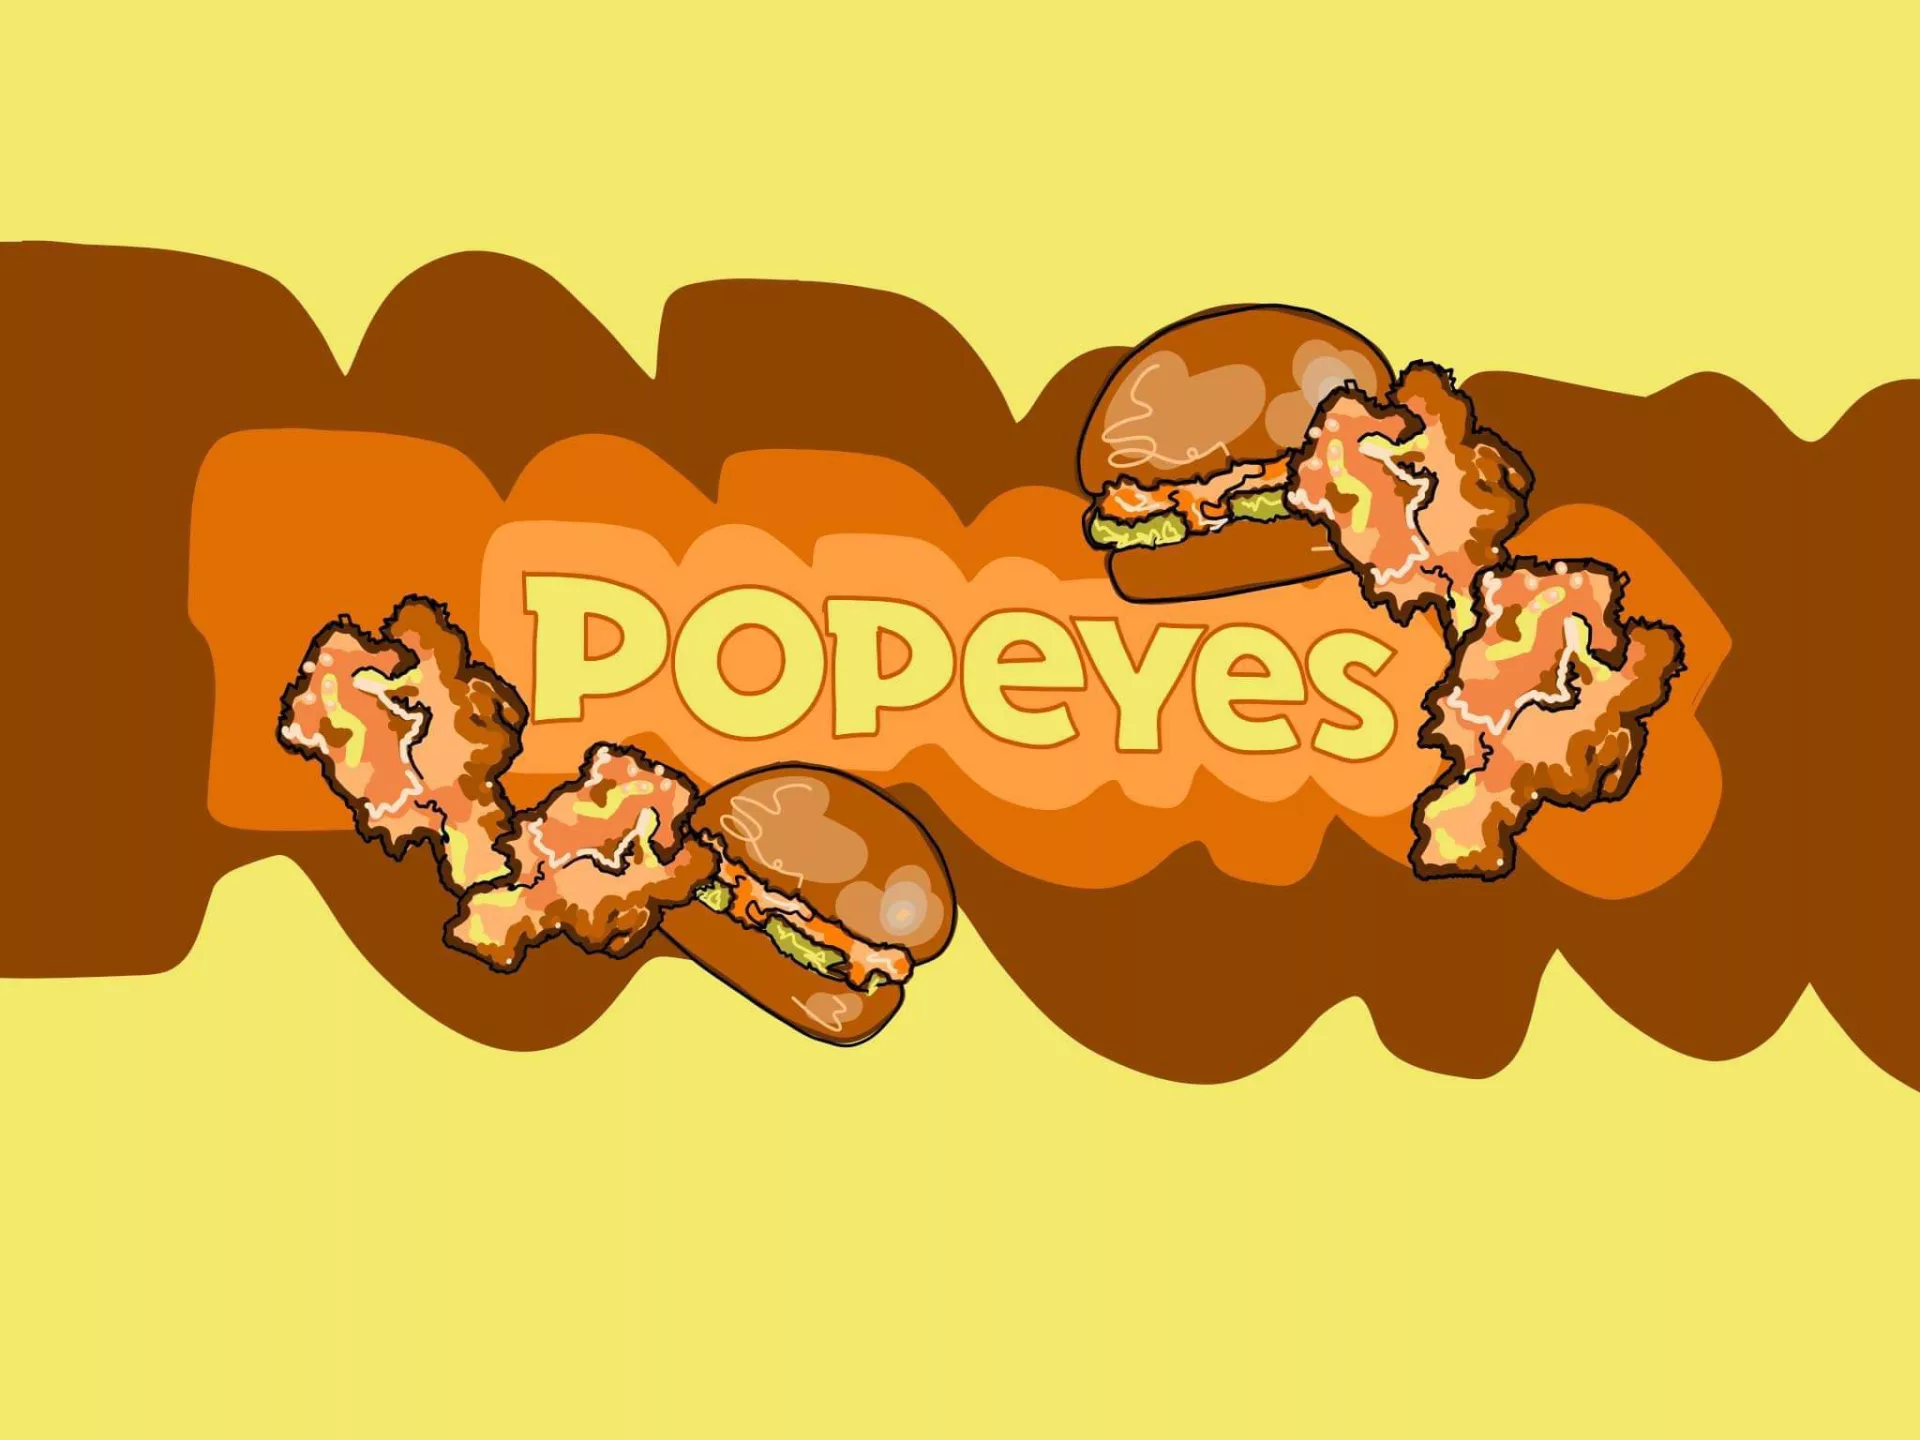 Sketch of the Popeyes logo